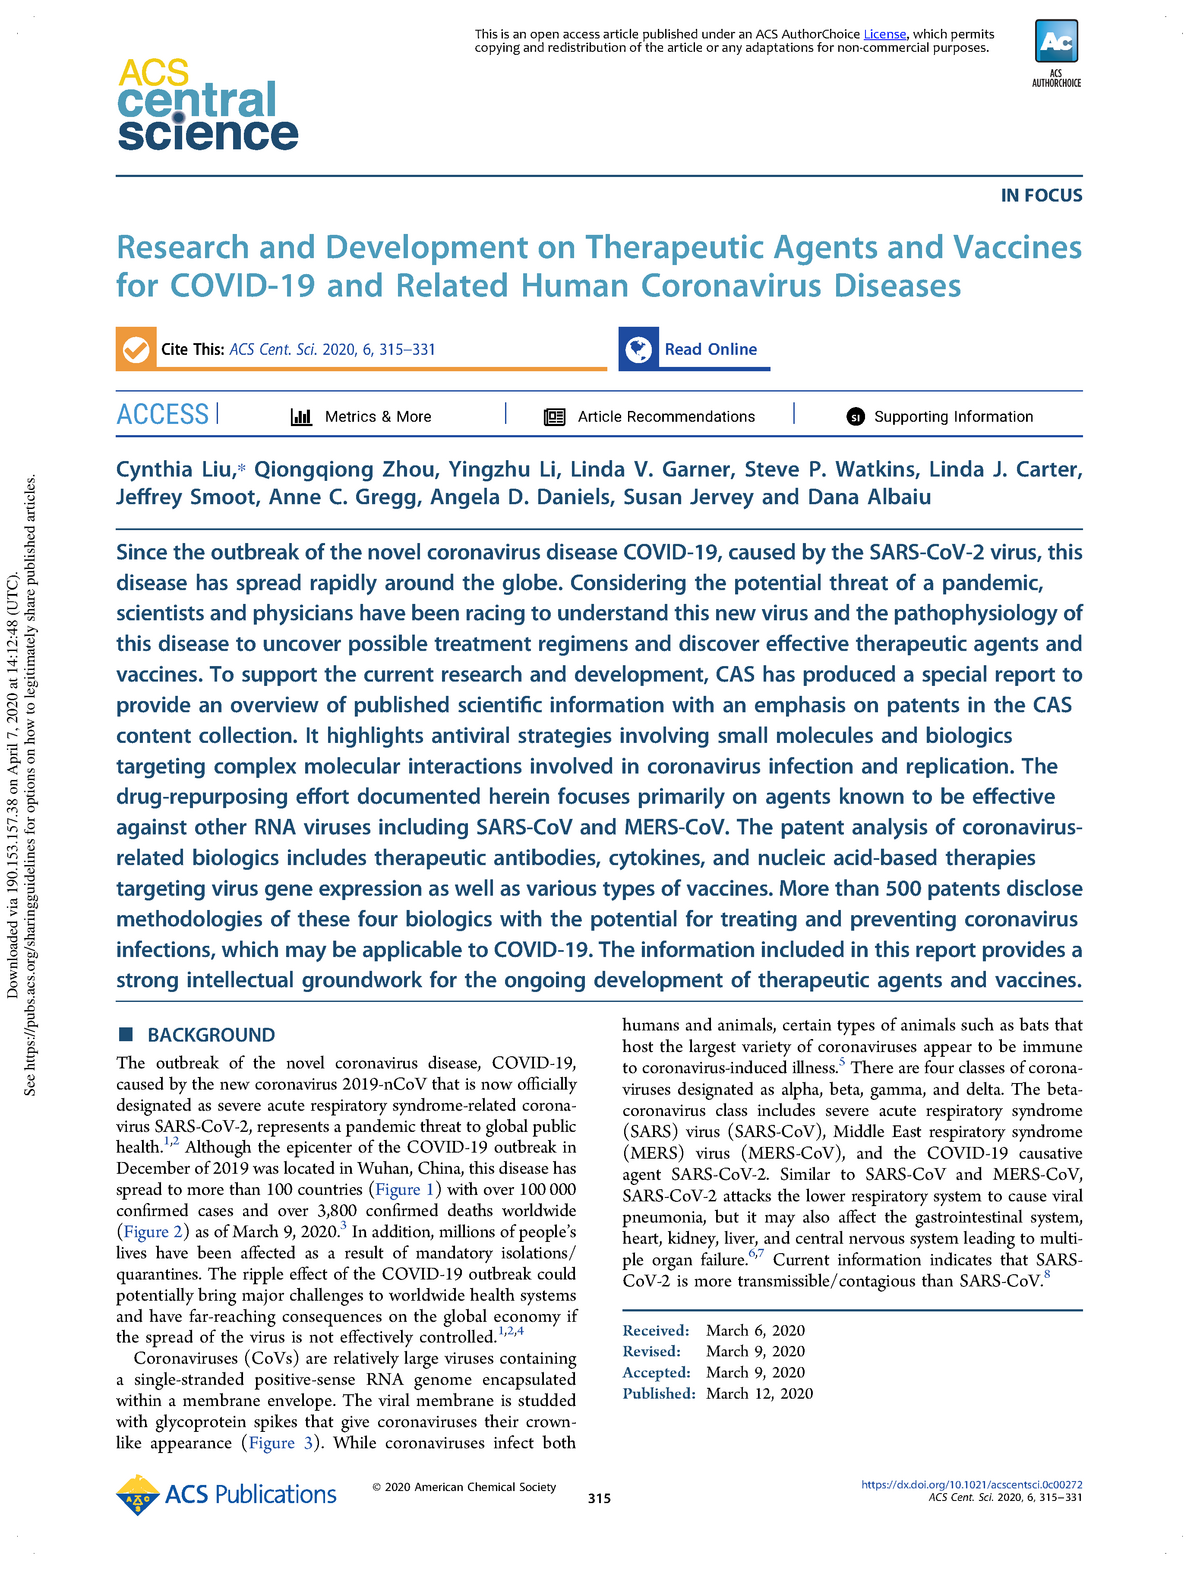 Liu et al 2020 Co V2 treatment - Research and Development on ...